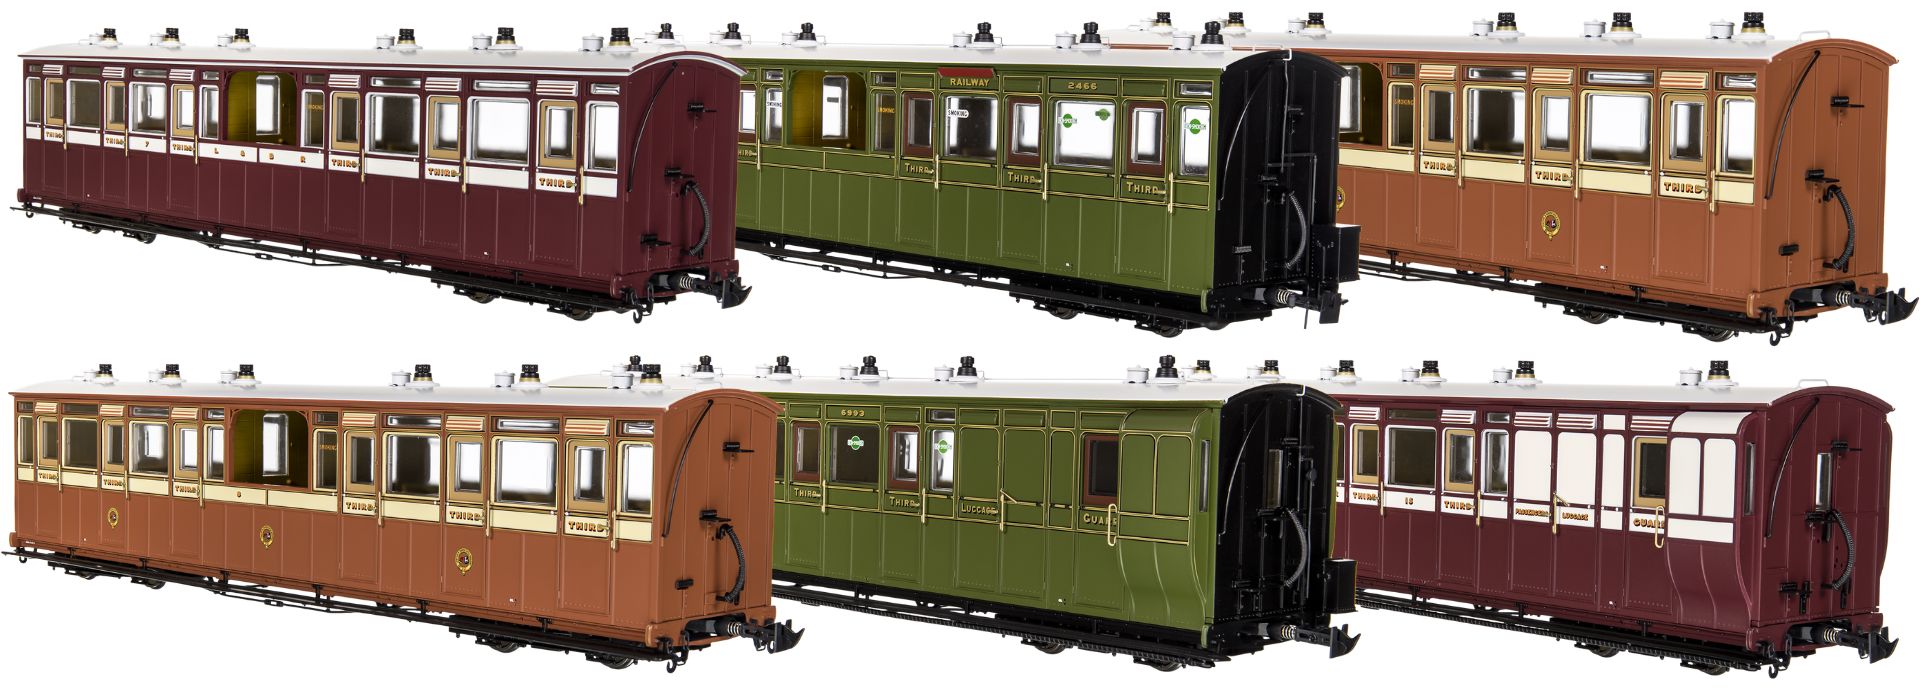 Lionheart Trains by Dapol O-16.5 Gauge (1:43.5 Scale) Lynton and Barnstaple bogie